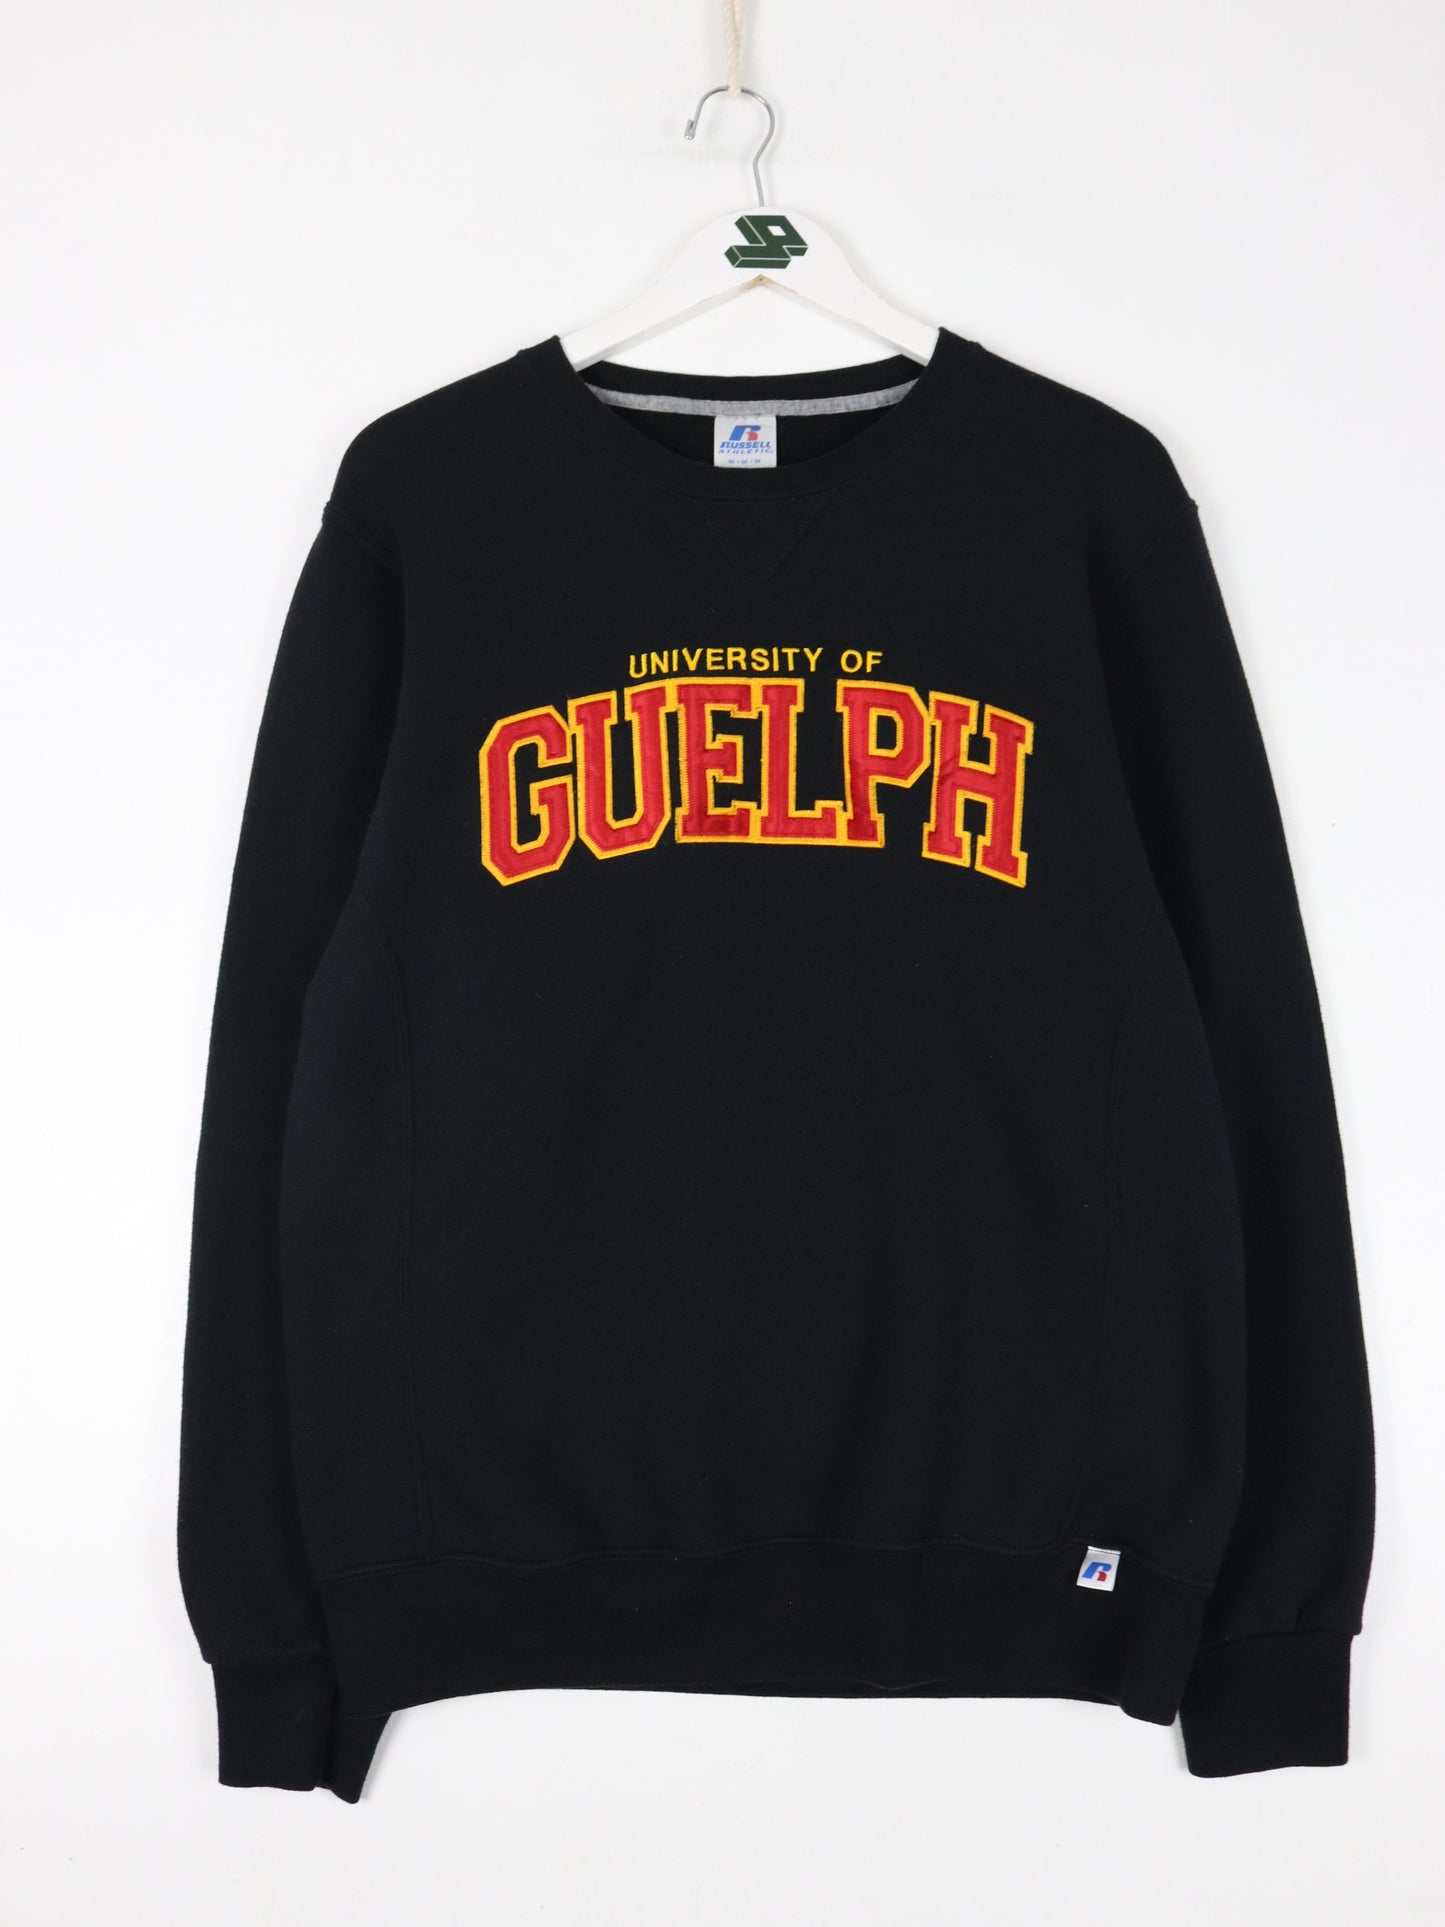 University of Guelph Sweatshirt Mens Medium Black College